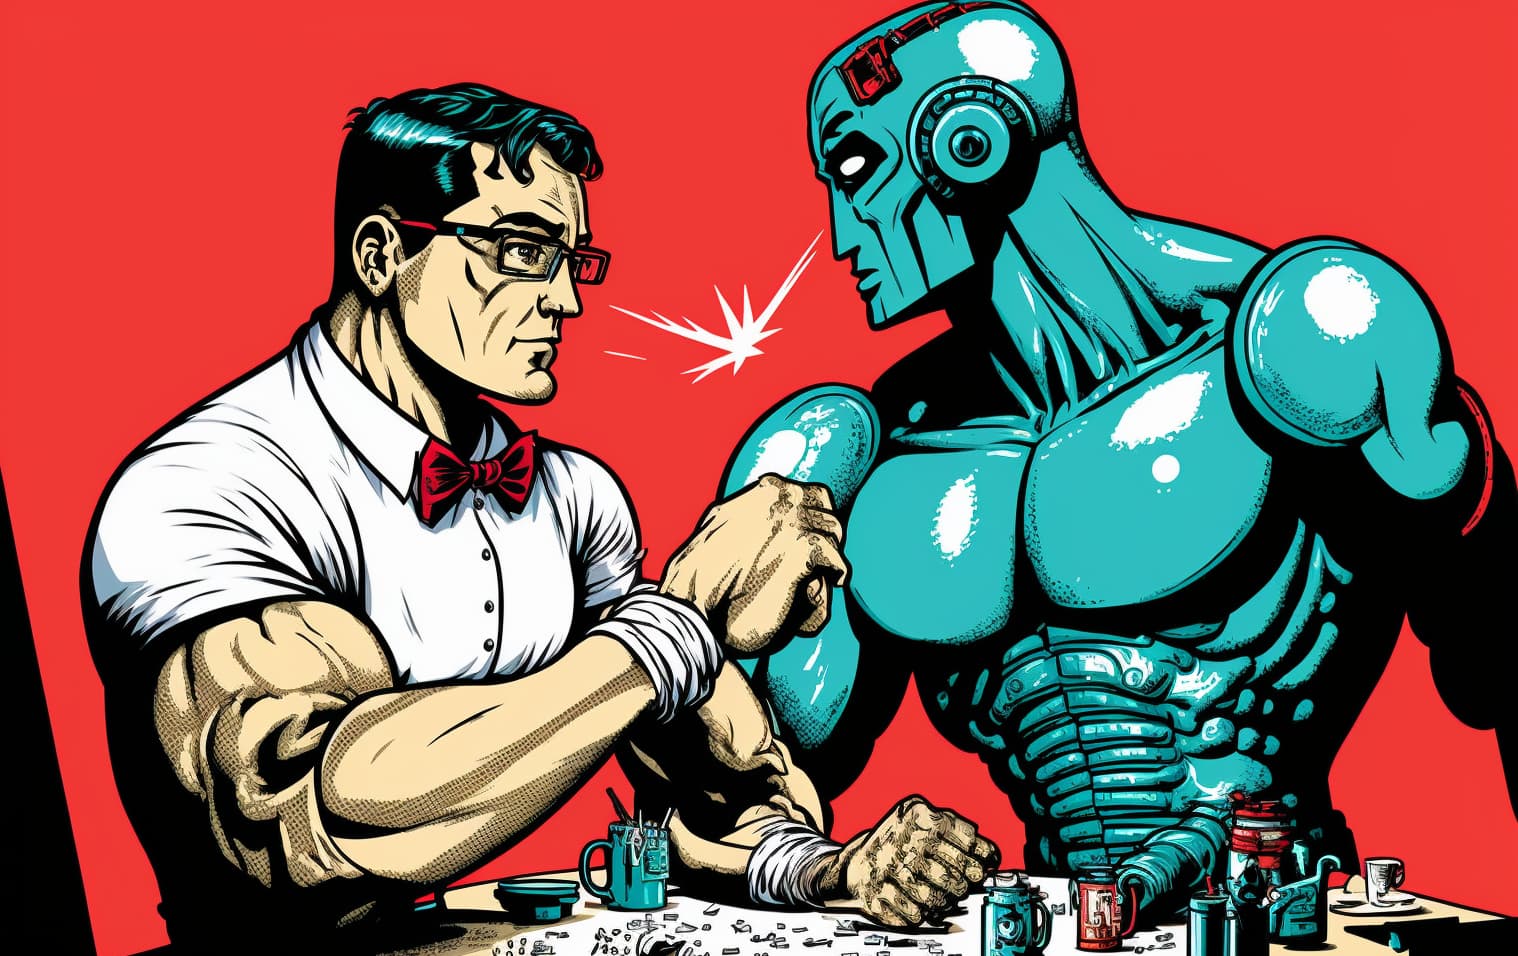 wbrenner man creative nerd arm wrestling with a robot pop art v c8d7d743 0e97 45f7 a1dd 4d8dd12c59c7